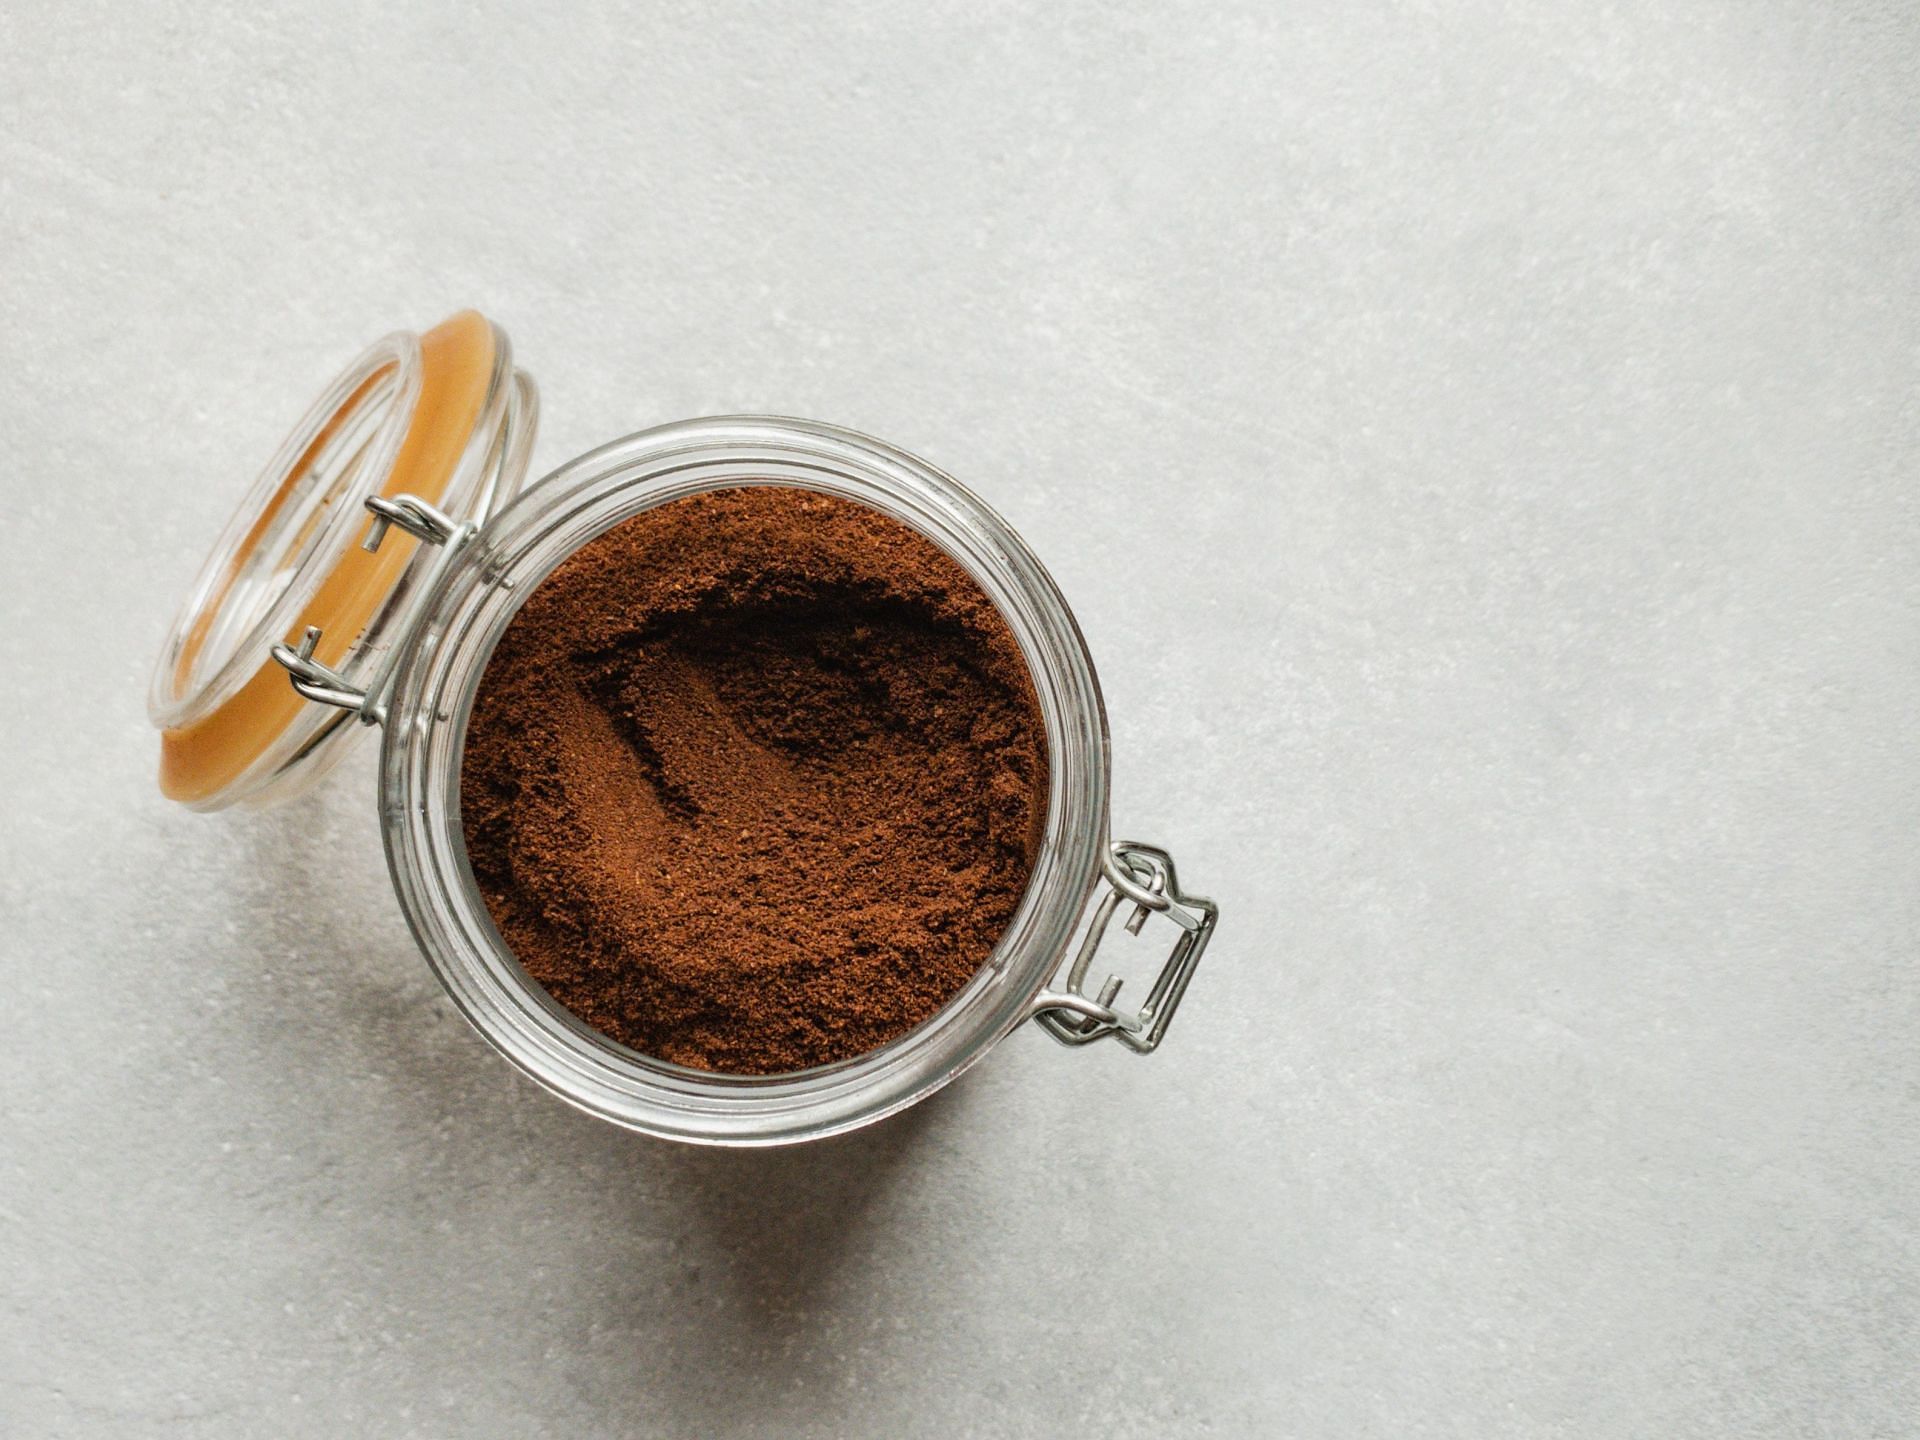 Cocoa extract (Image via Unsplash/Anastasia)